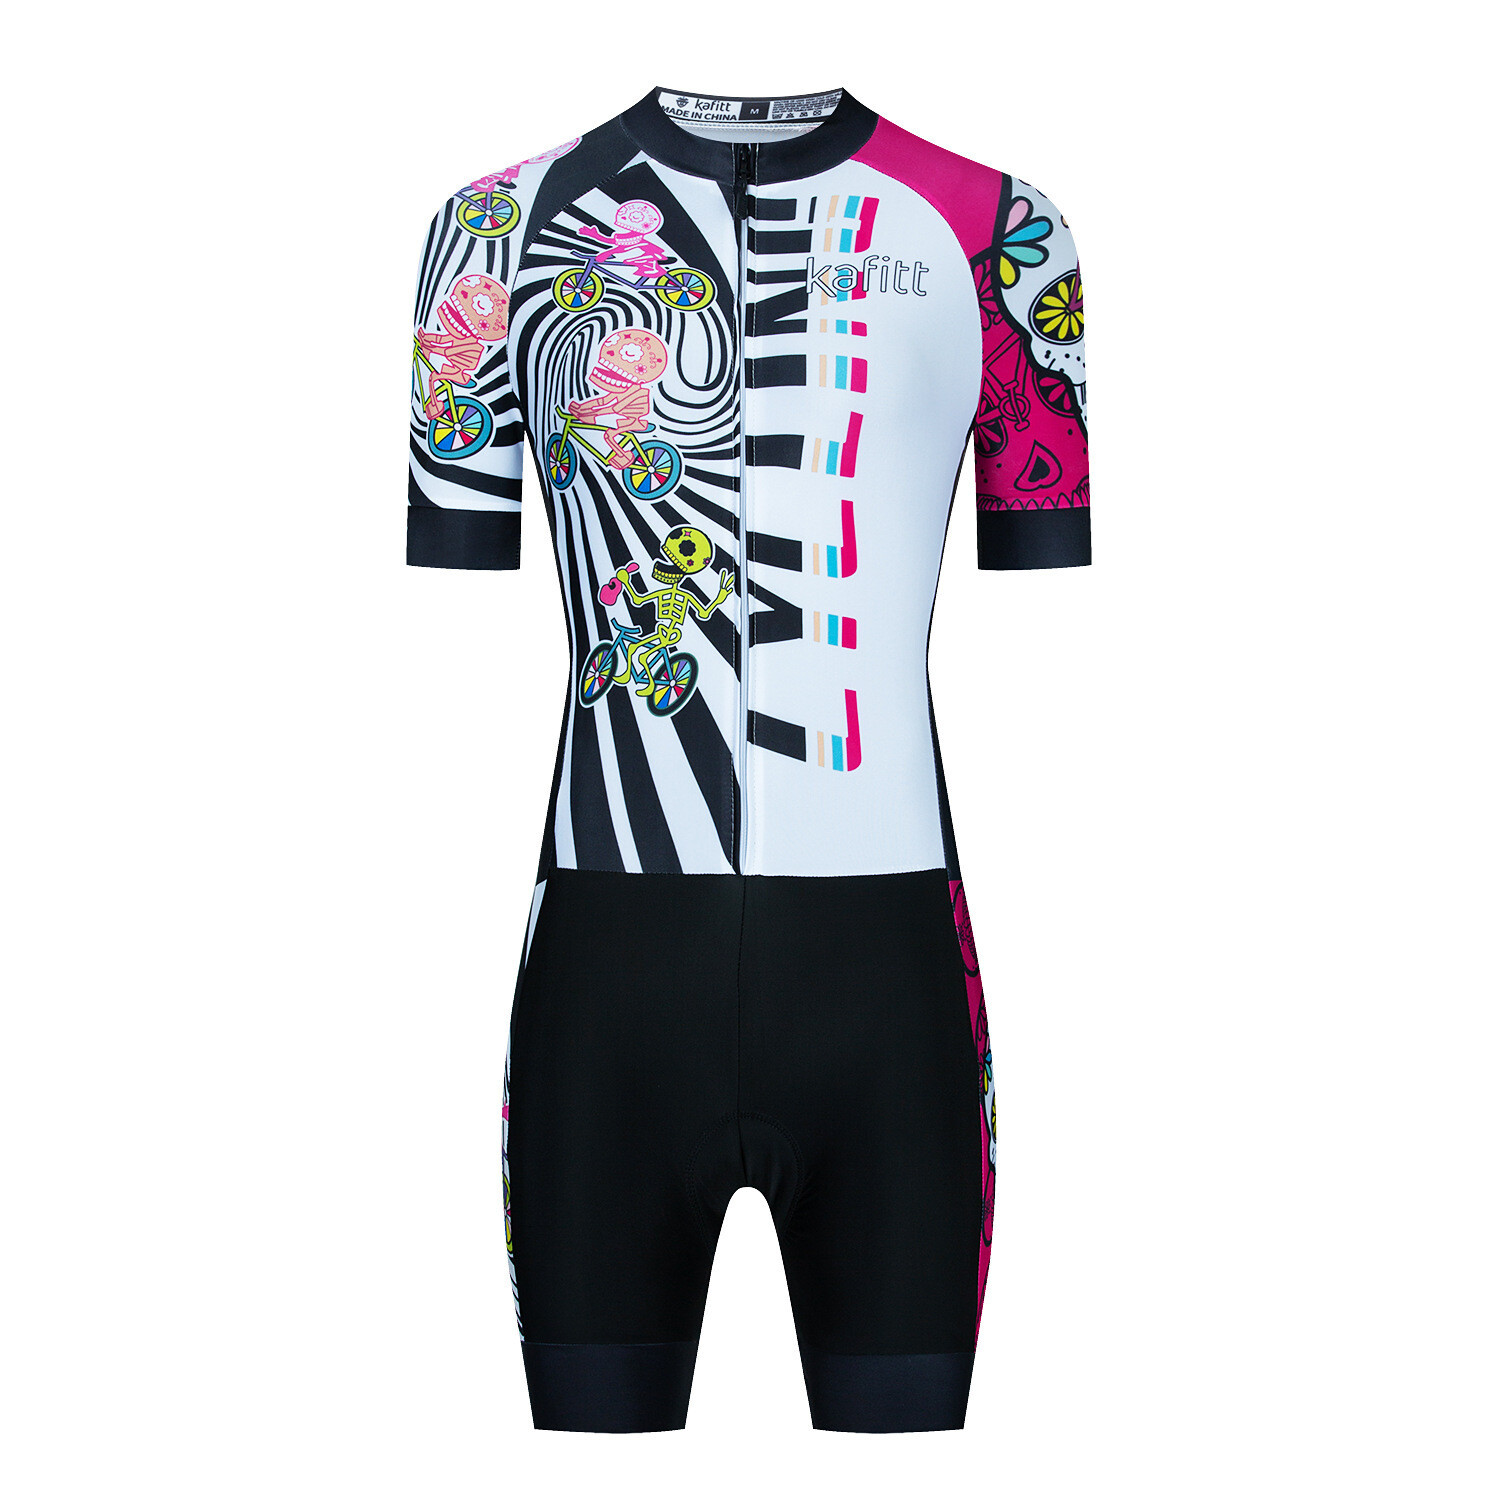 Team Clothes Men&#39;s And Women&#39;s Universal Short-sleeved Riding Jumpsuit, Color: Kafitt20-40, Size: Xs